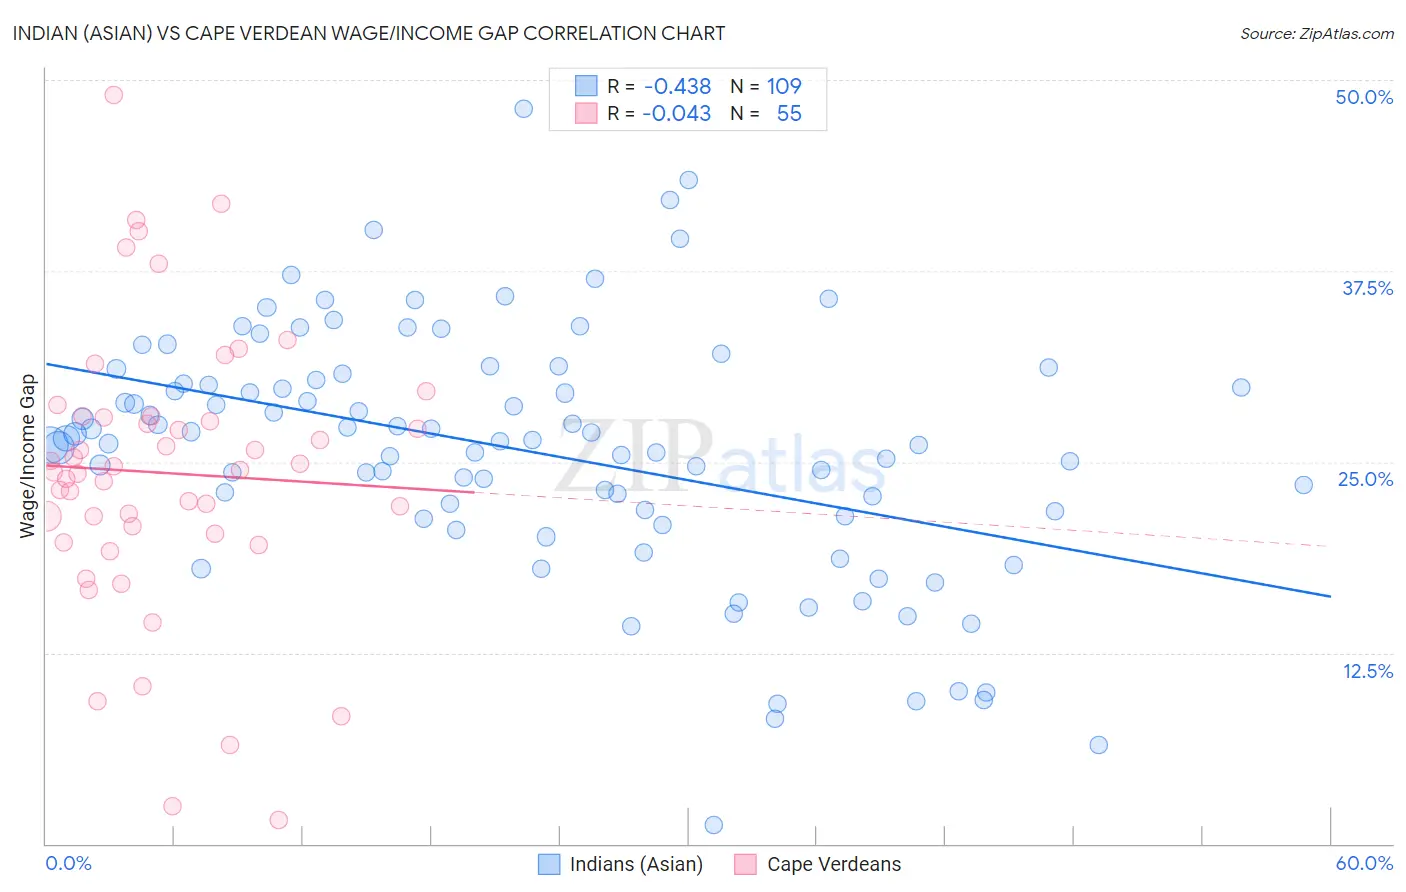 Indian (Asian) vs Cape Verdean Wage/Income Gap